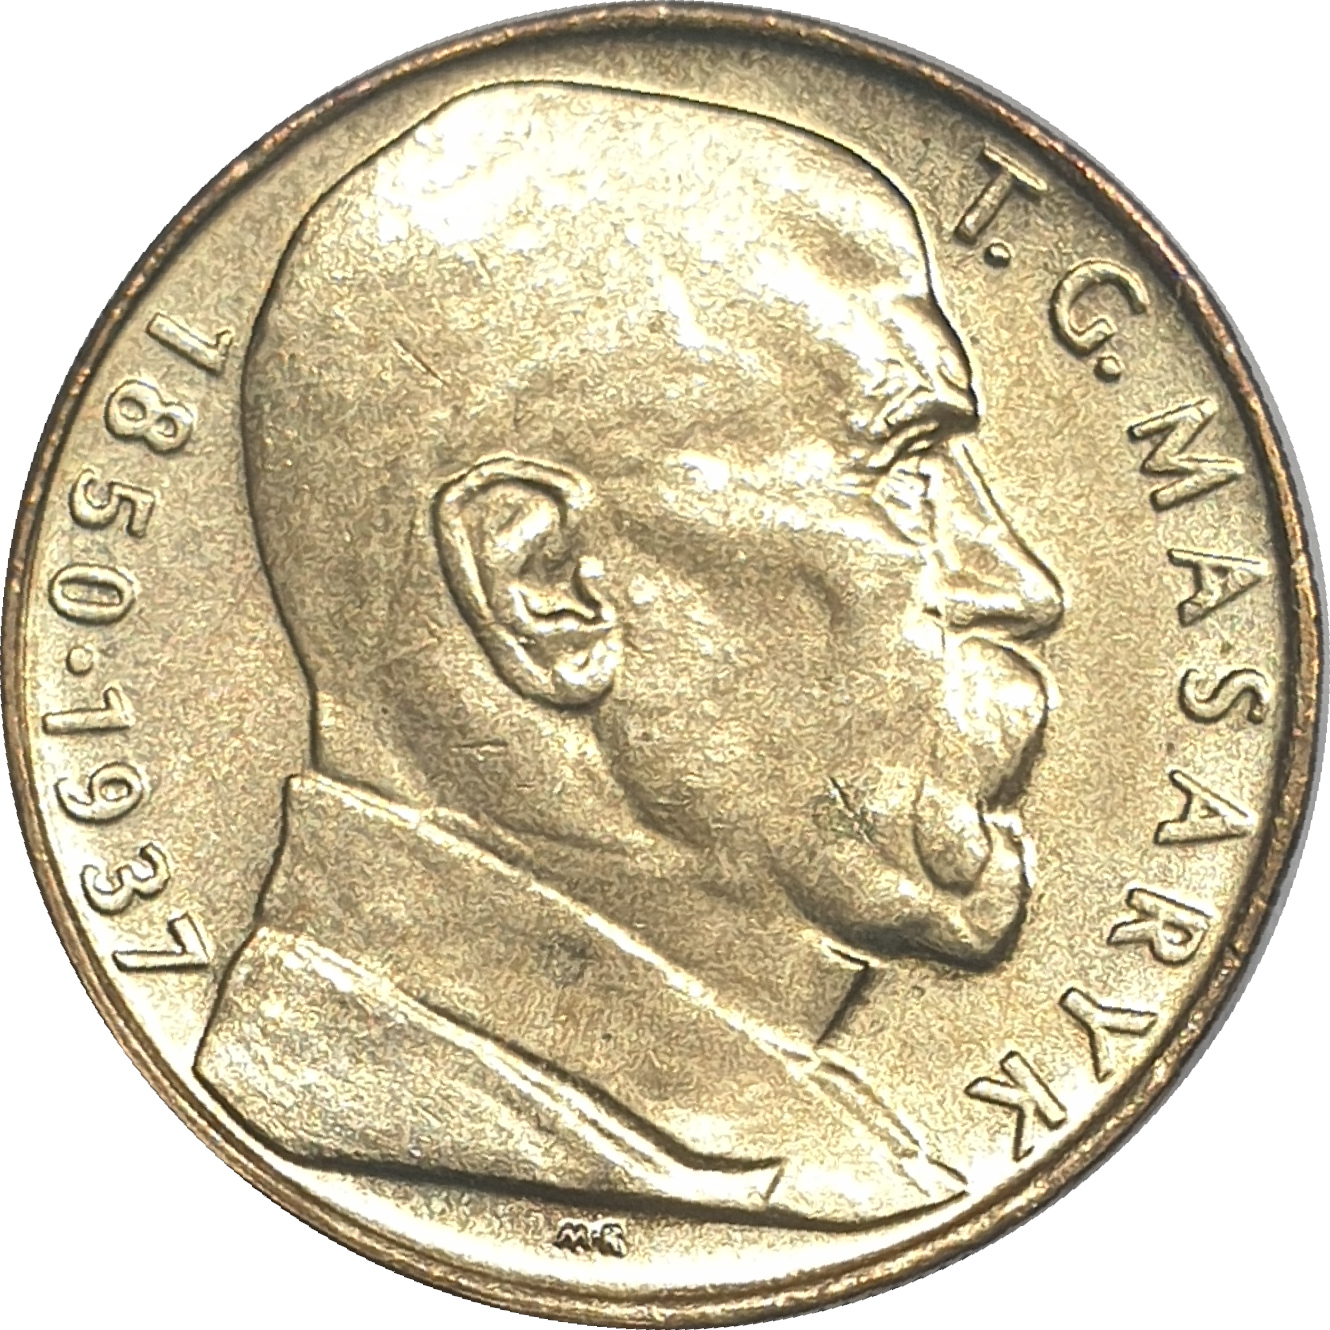 10 korun - Thomas G. Masaryk